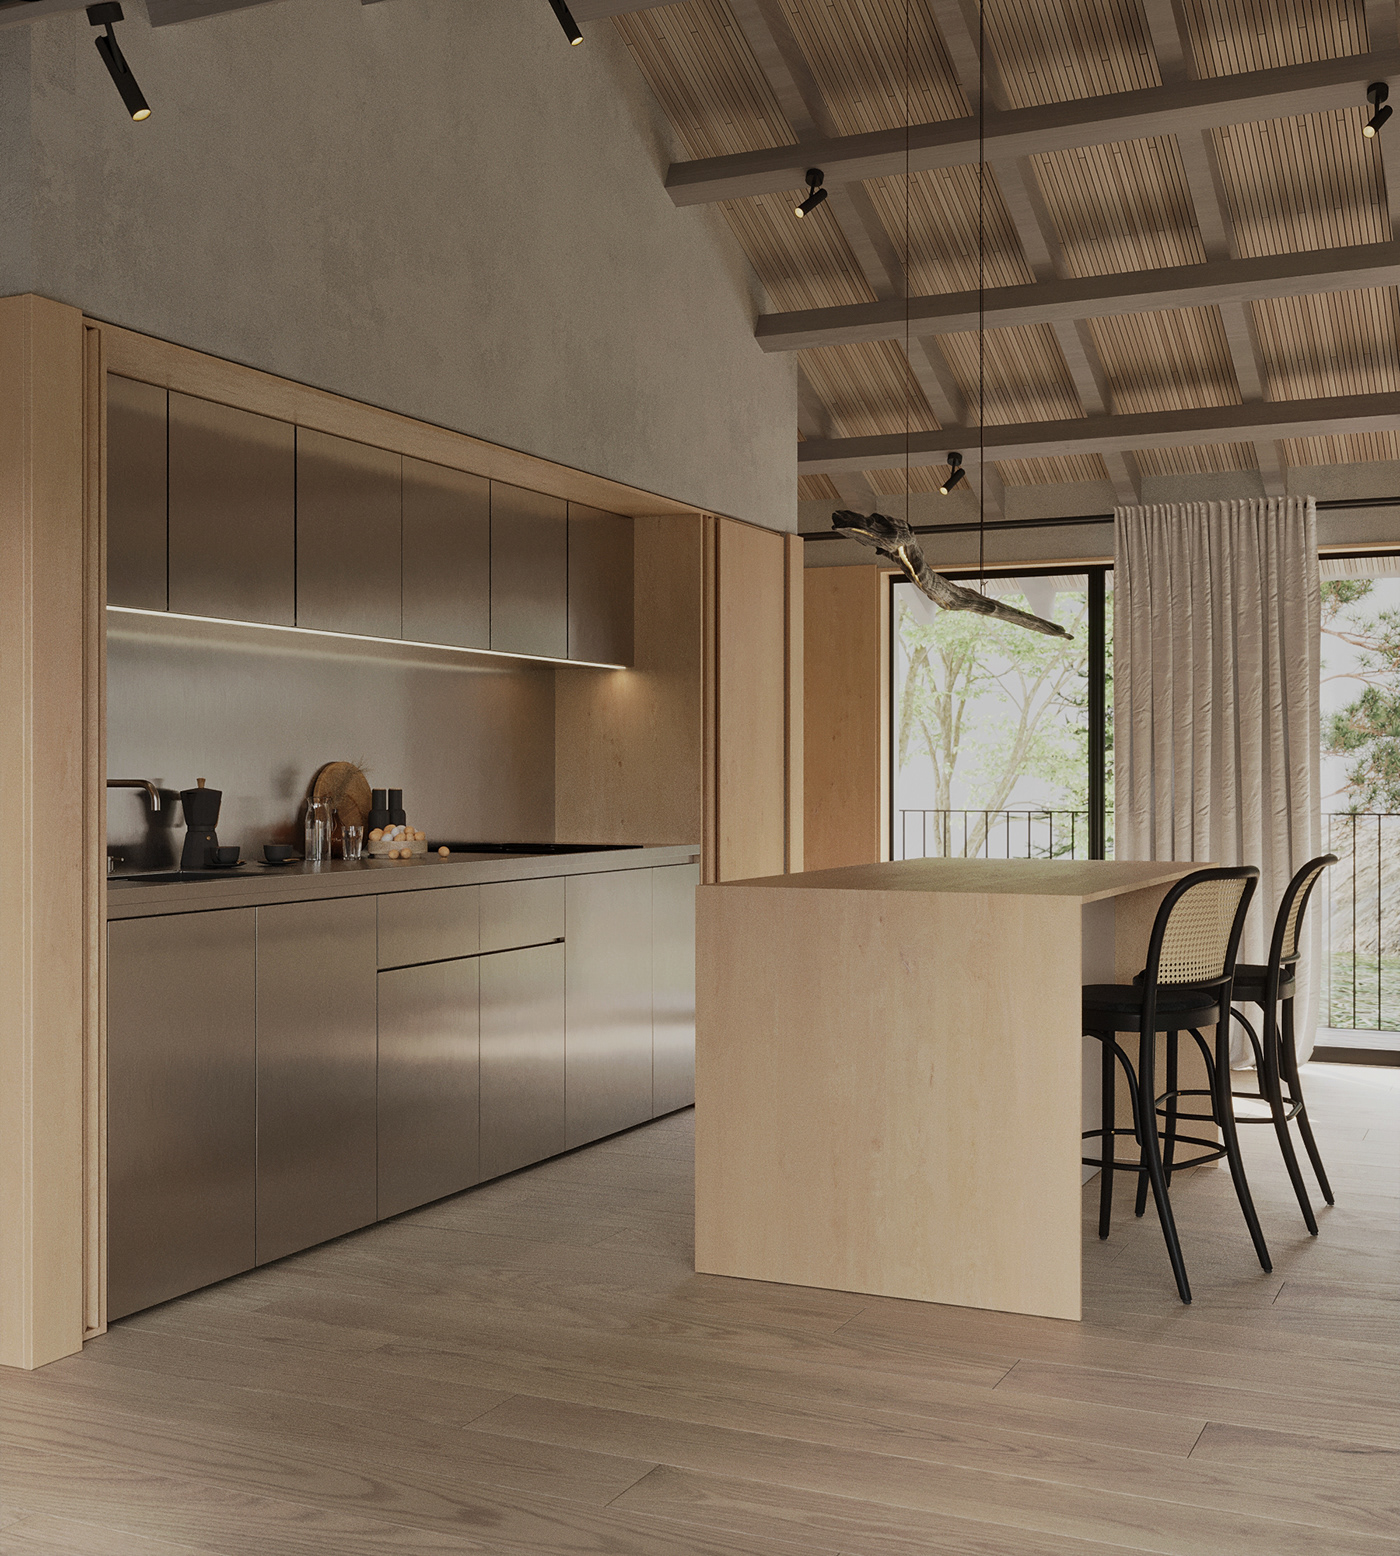 3ds max architecture archviz corona Cottage house interior design  modern Render visualization